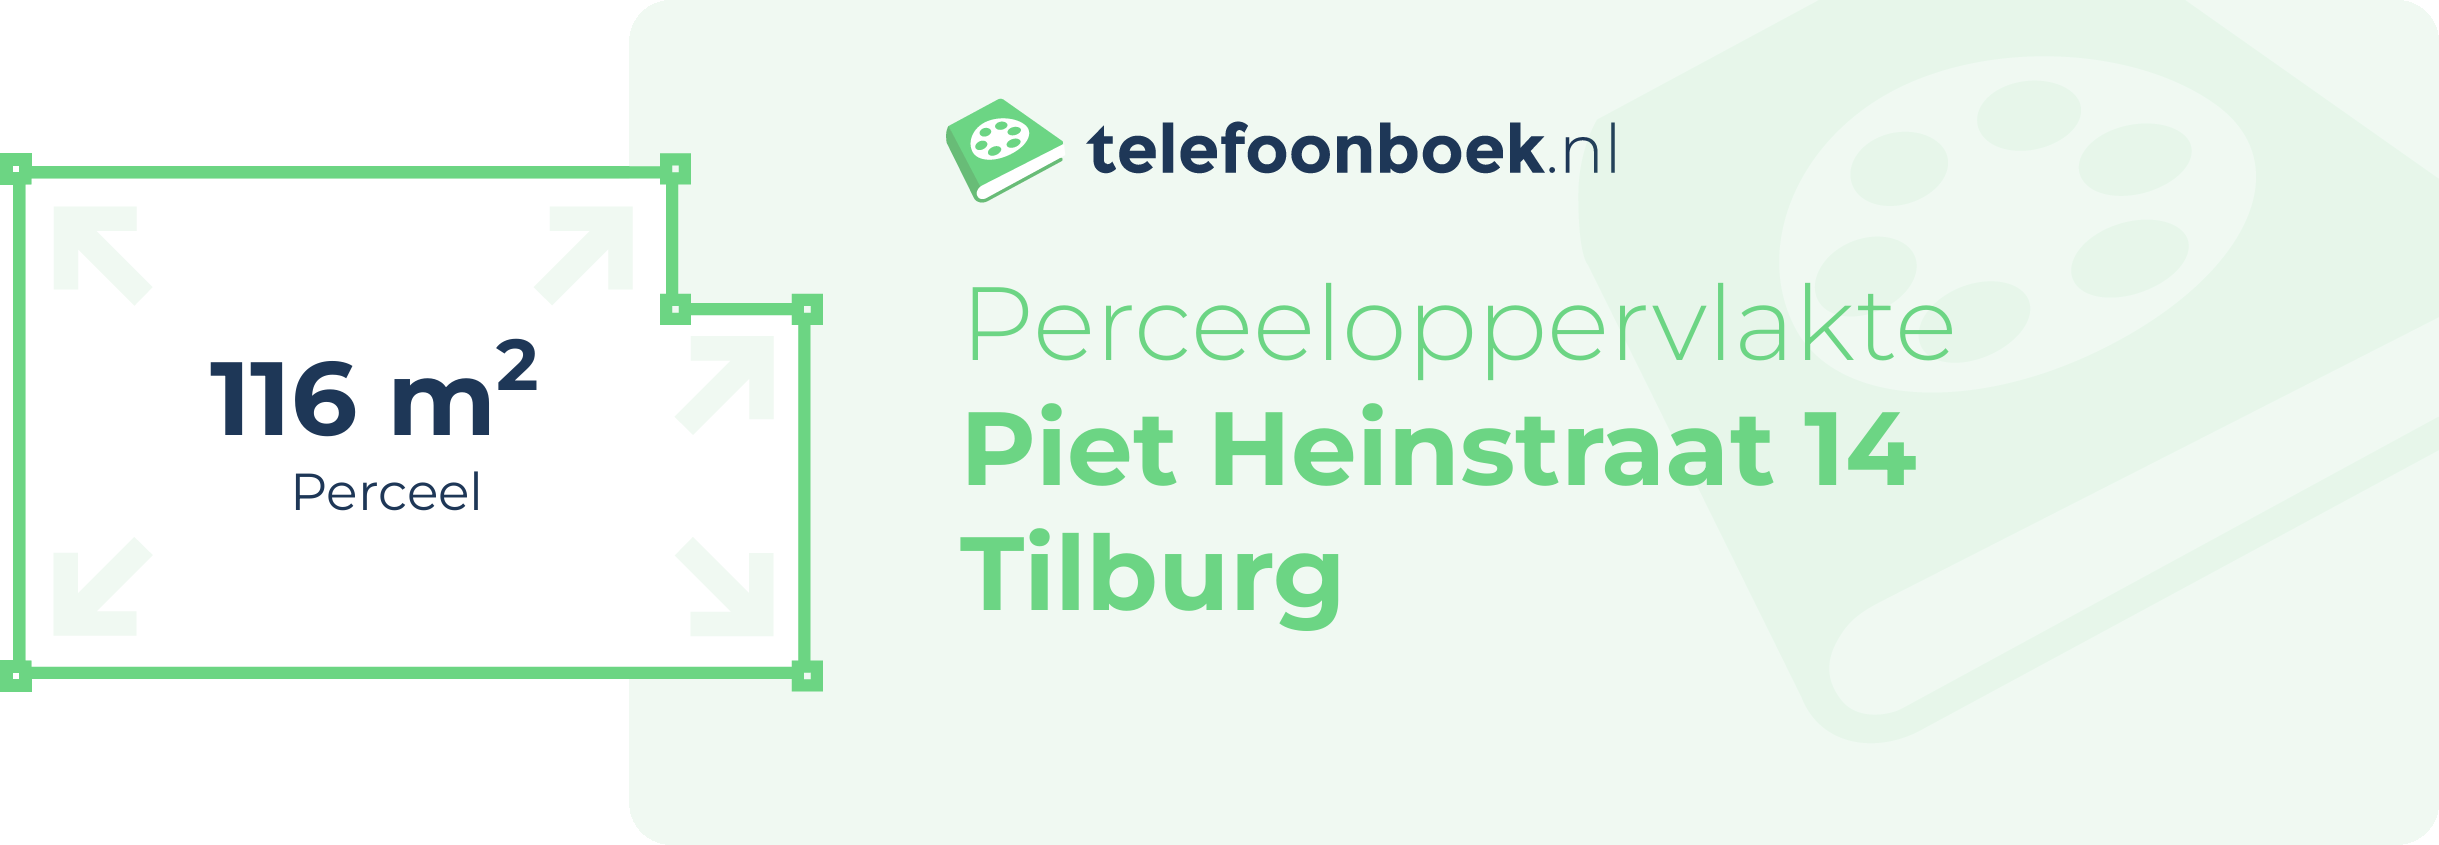 Perceeloppervlakte Piet Heinstraat 14 Tilburg